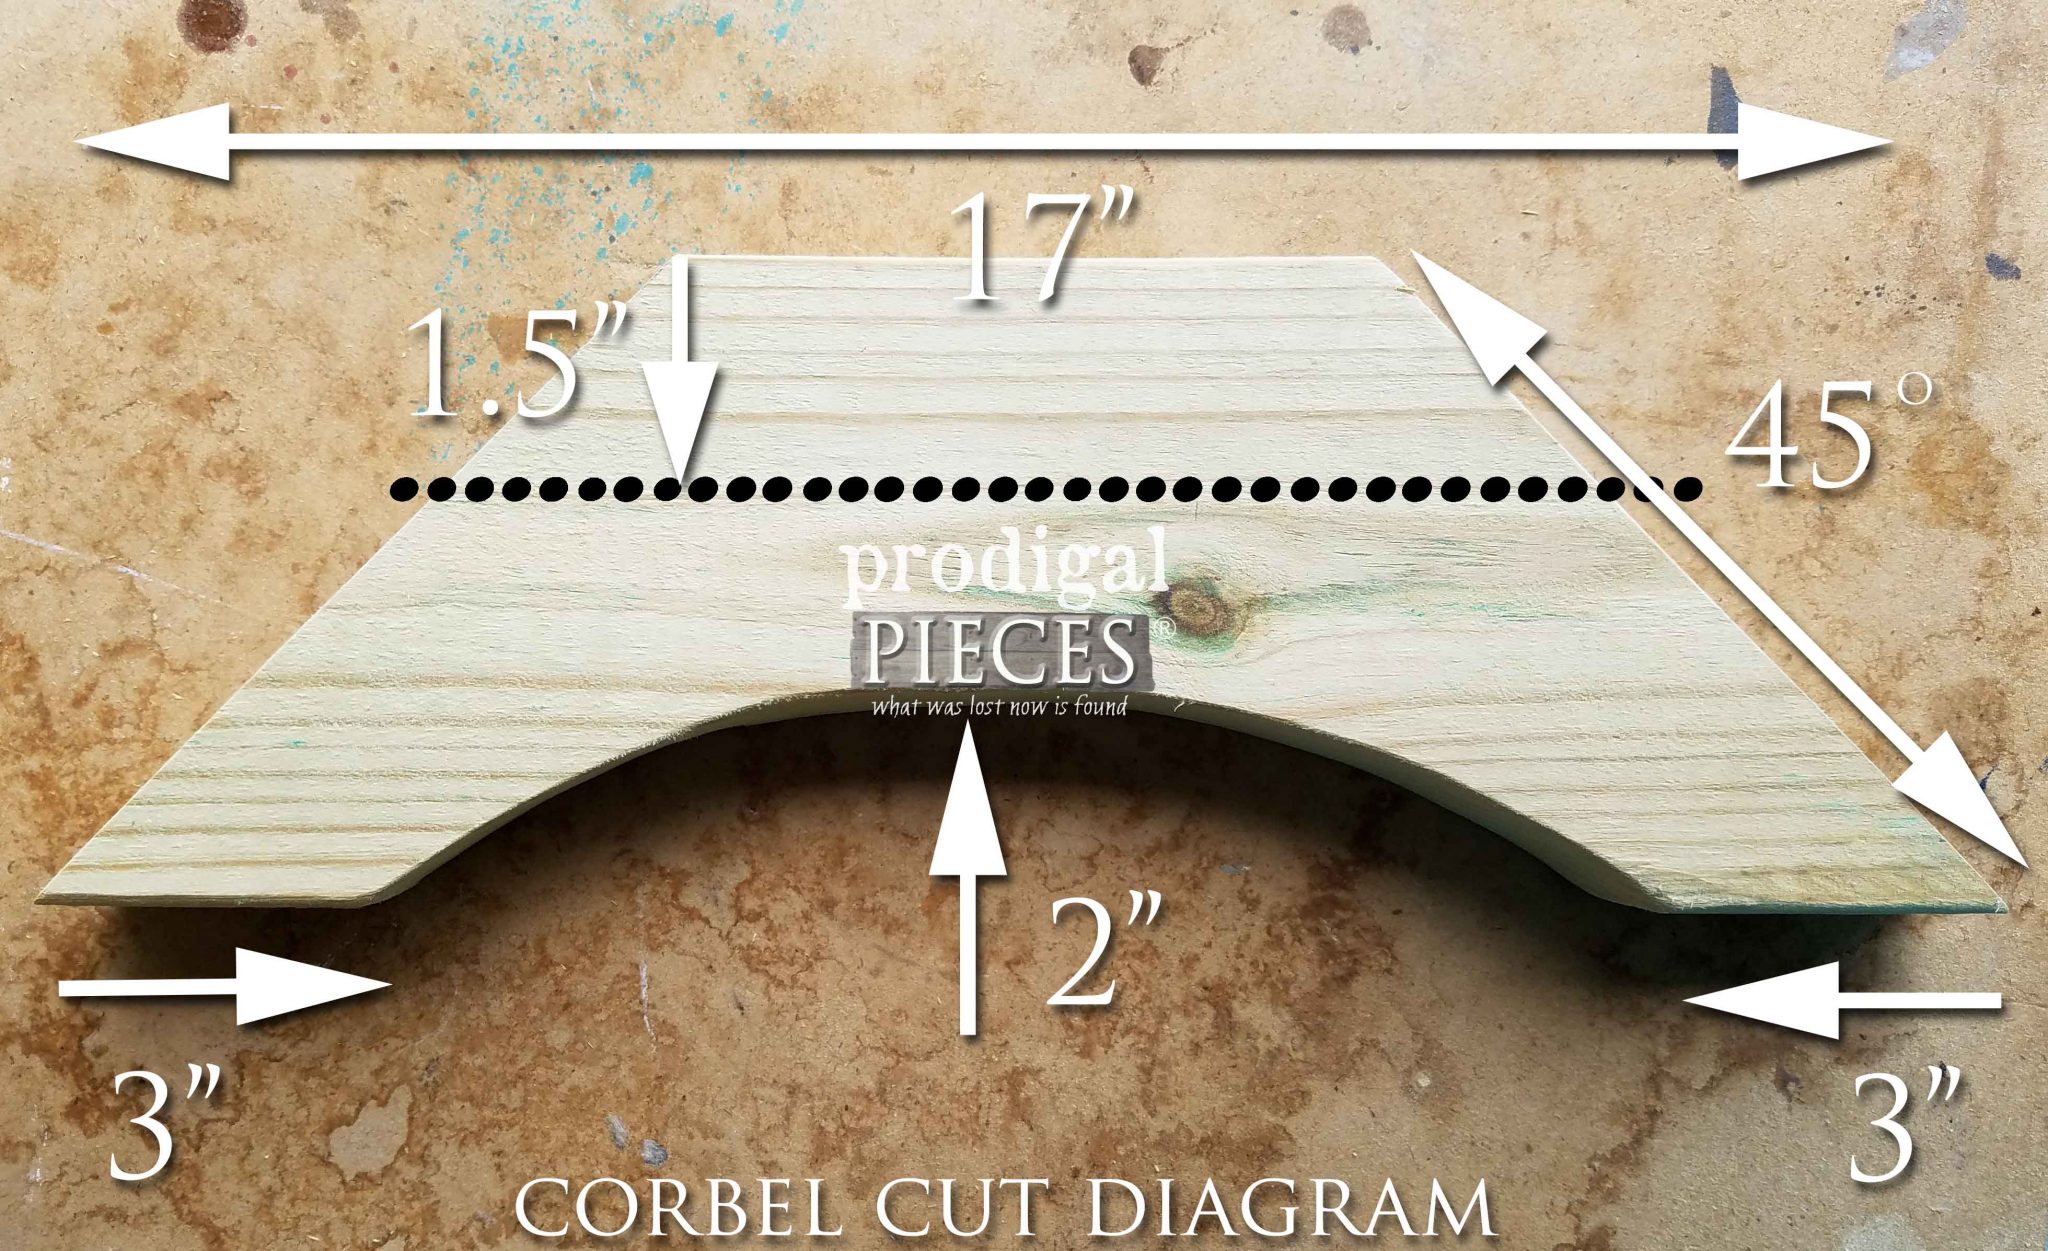 Corbel Cut Diagram Design by Prodigal Pieces | prodigalpieces.com